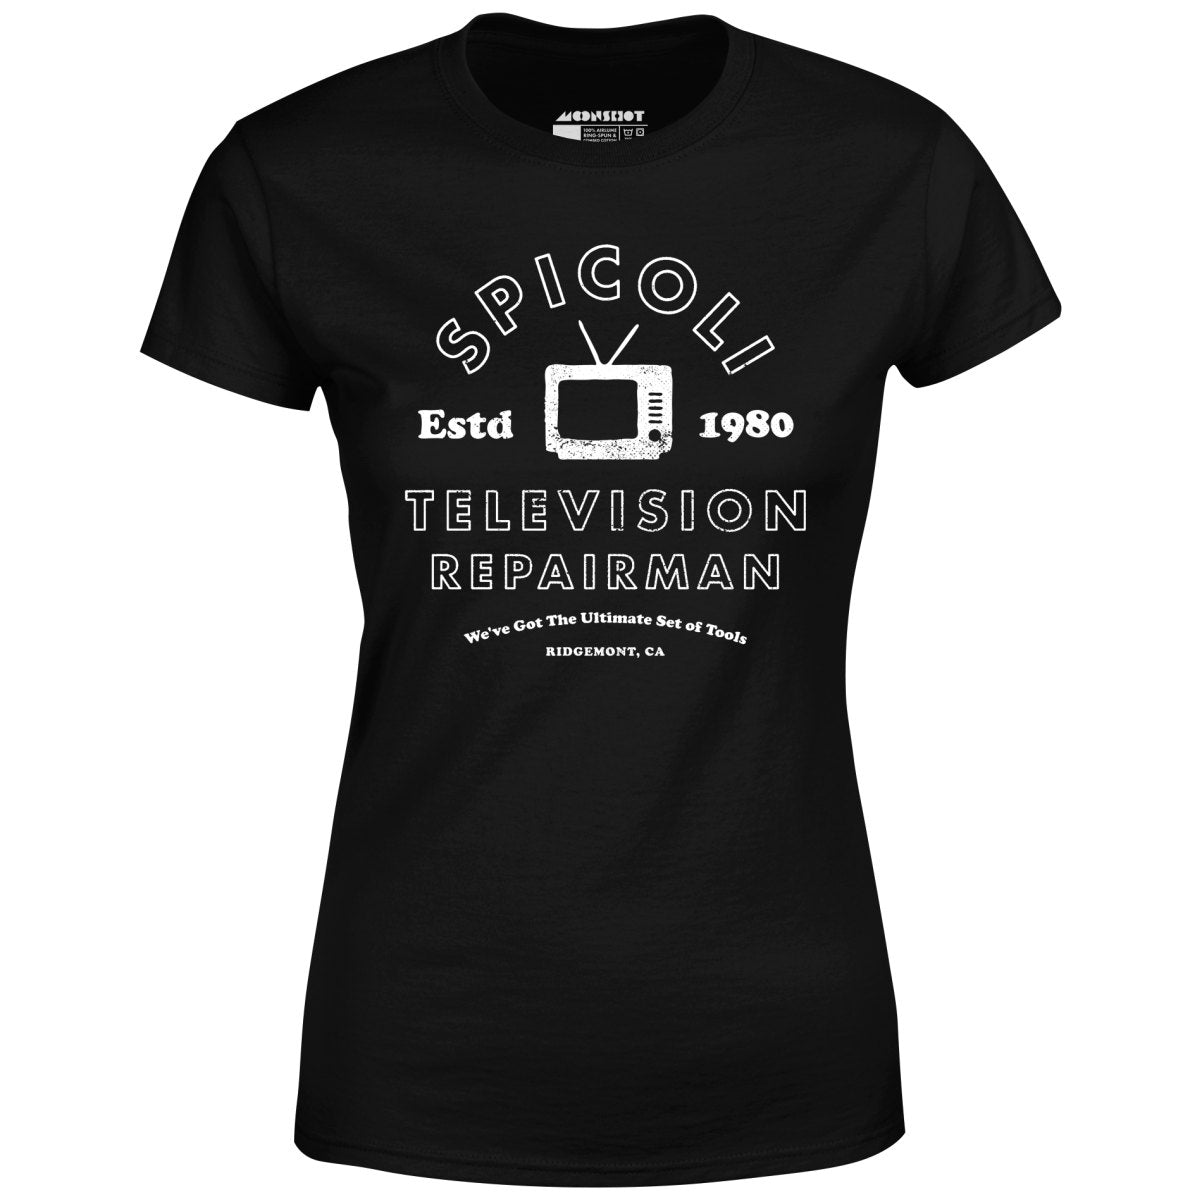 Spicoli Television Repairman - Women's T-Shirt